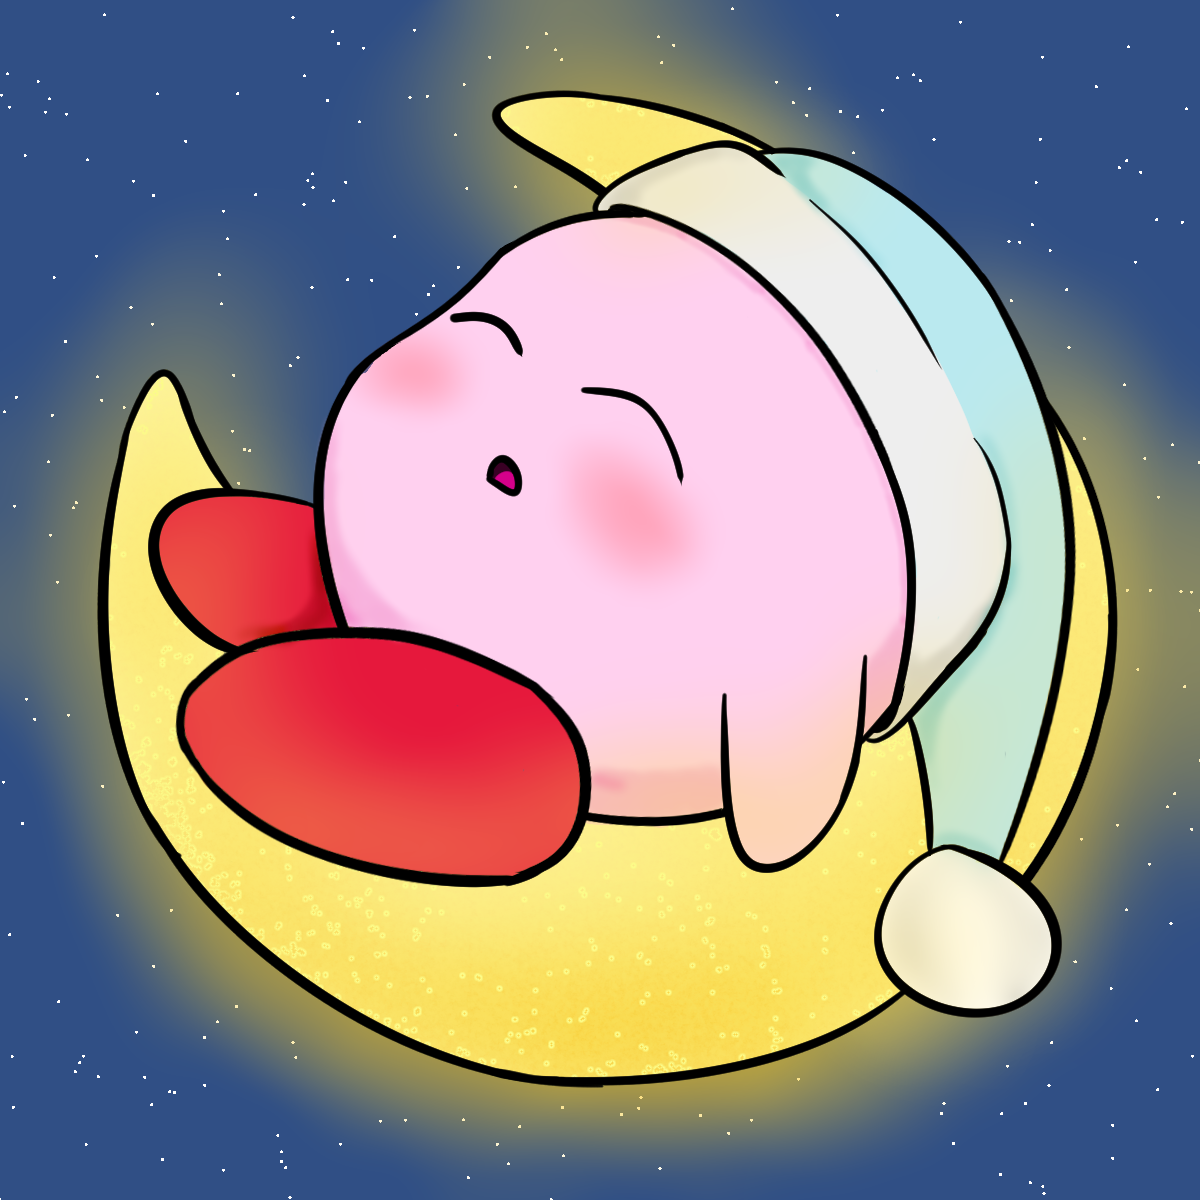 Kirby dormido by thenewAX13 on DeviantArt